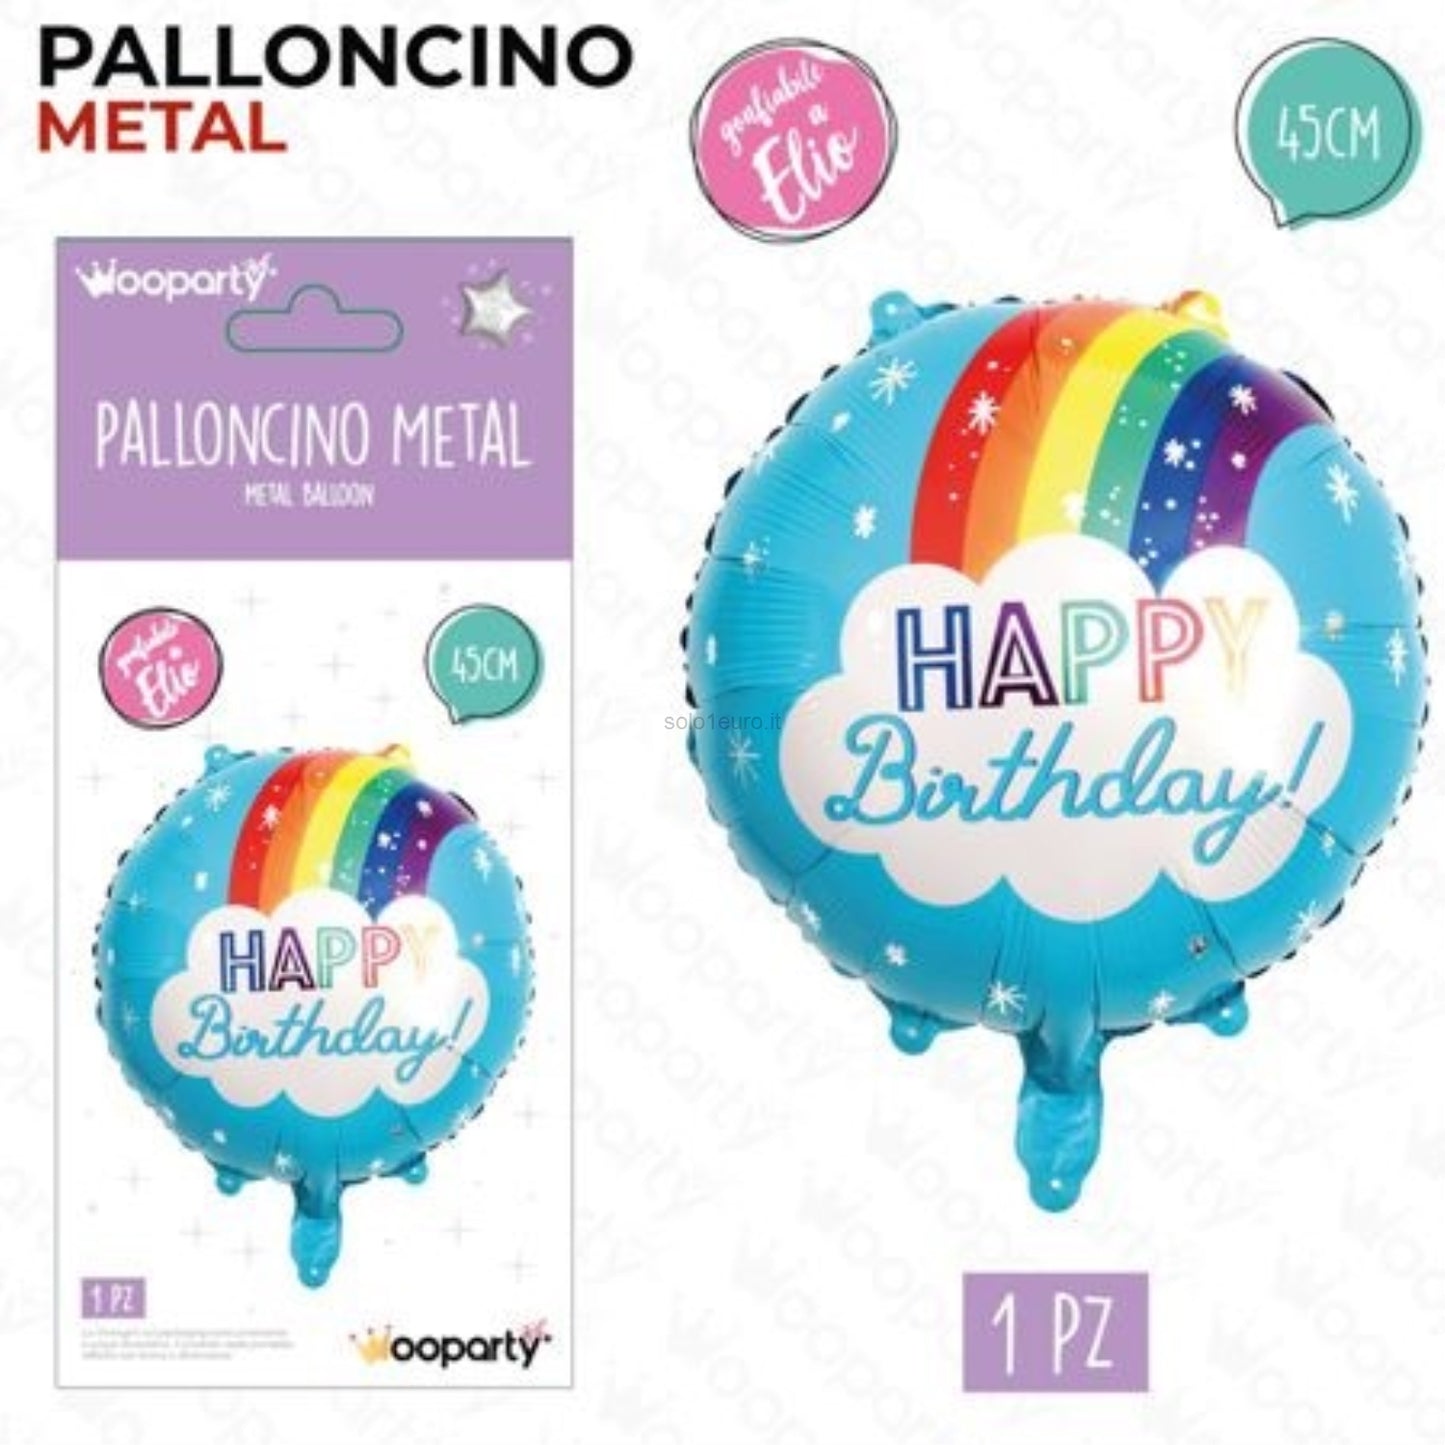 PALLONCINO METAL HAPPY BIRTHDAY 45CM